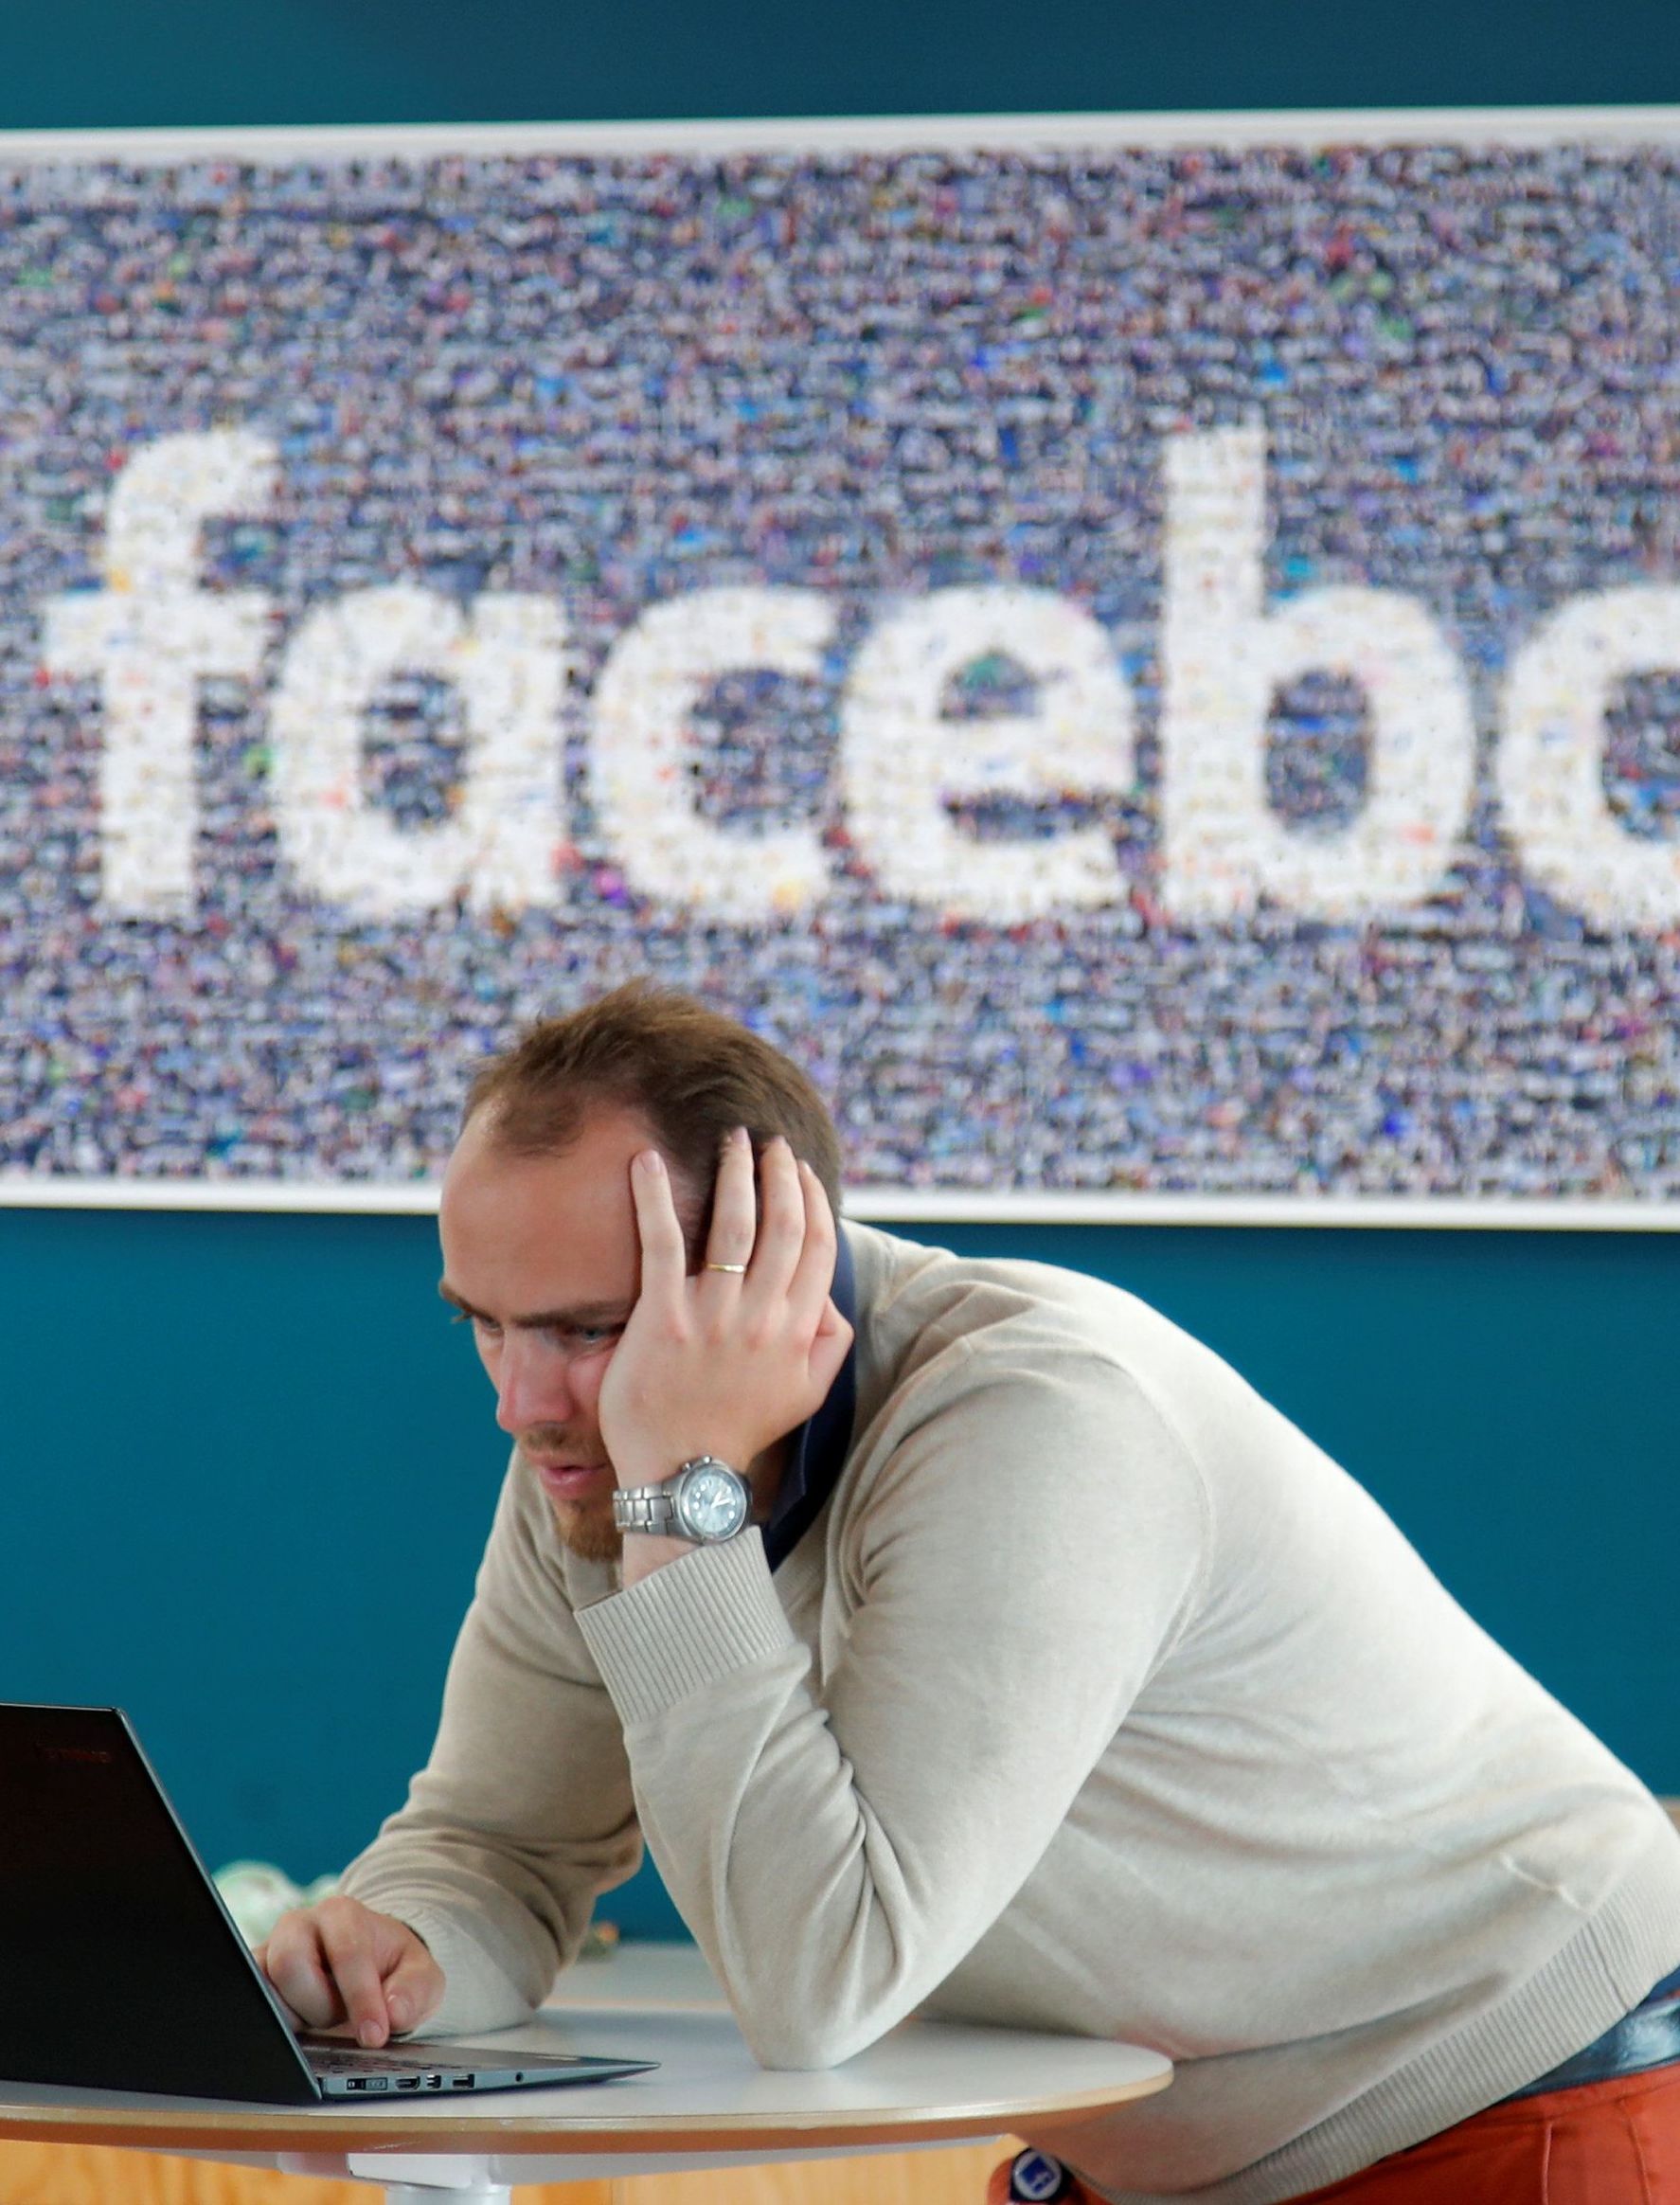 Facebook "влетела" на более $ 600 тысяч из-за скандала с Cambridge Analytica